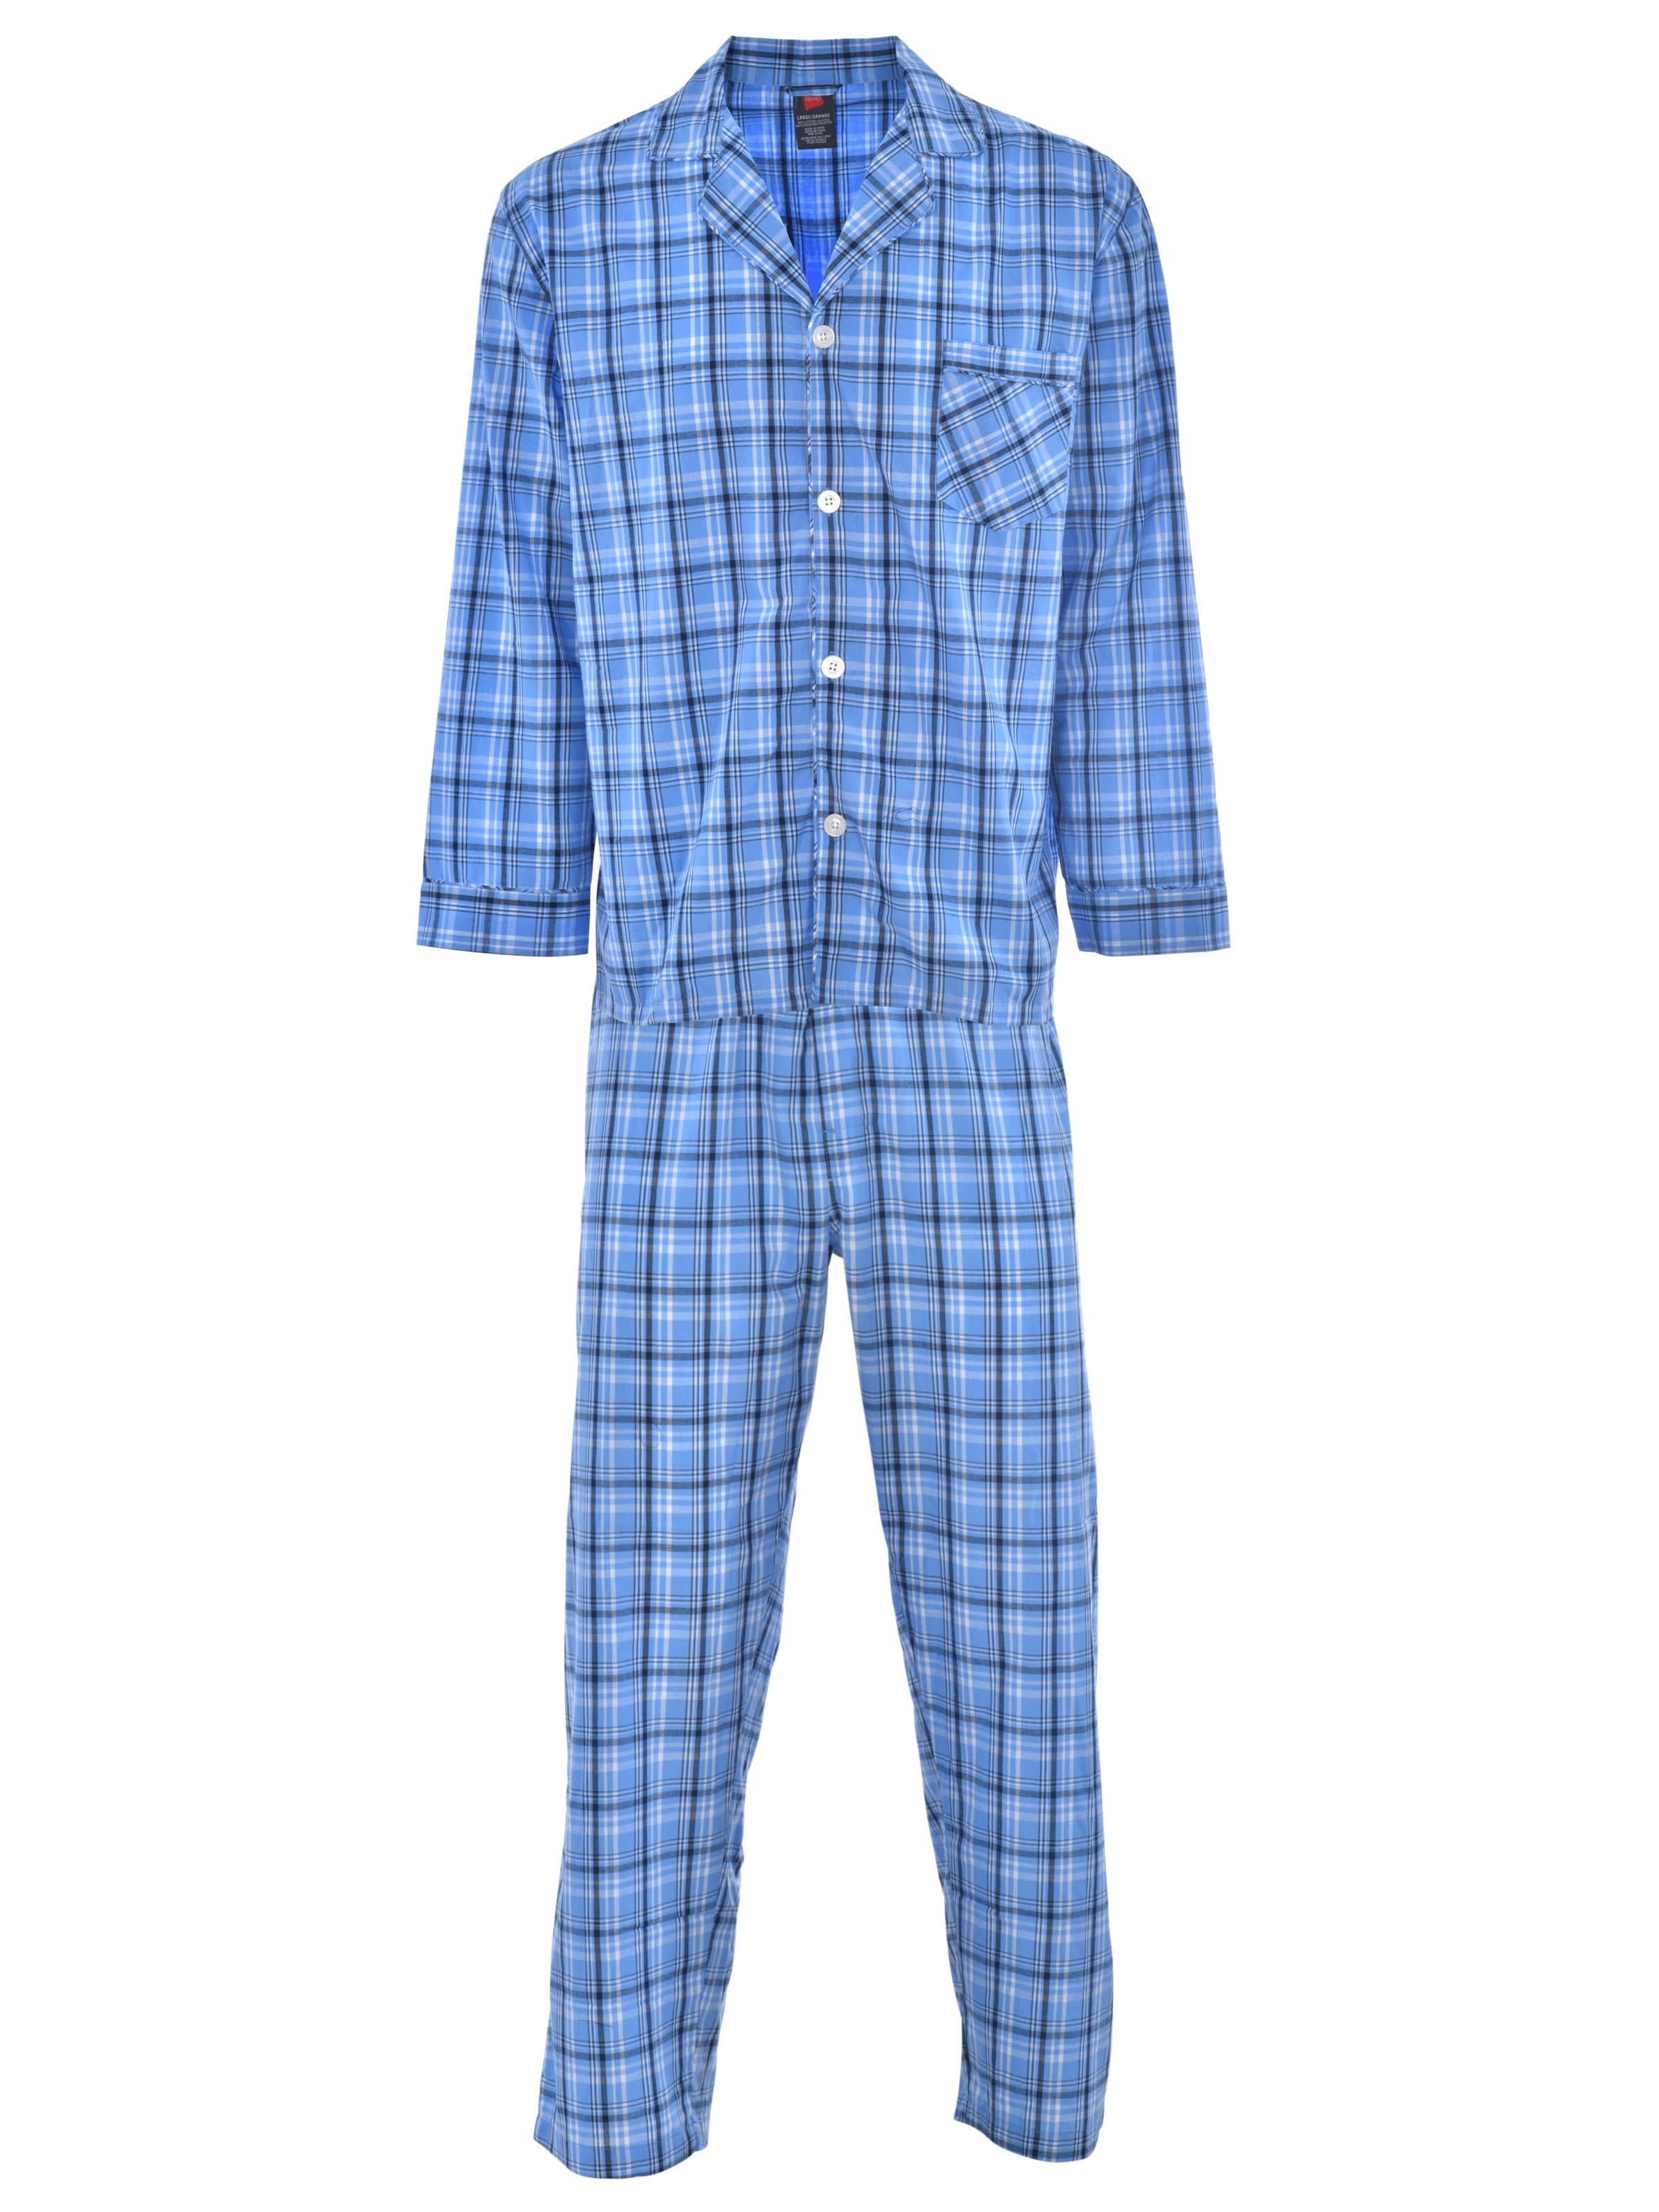 Hanes MEN'S Woven Pajama Long Sleeve Shirt & Pants Grey Checked Plaid XL L 2X